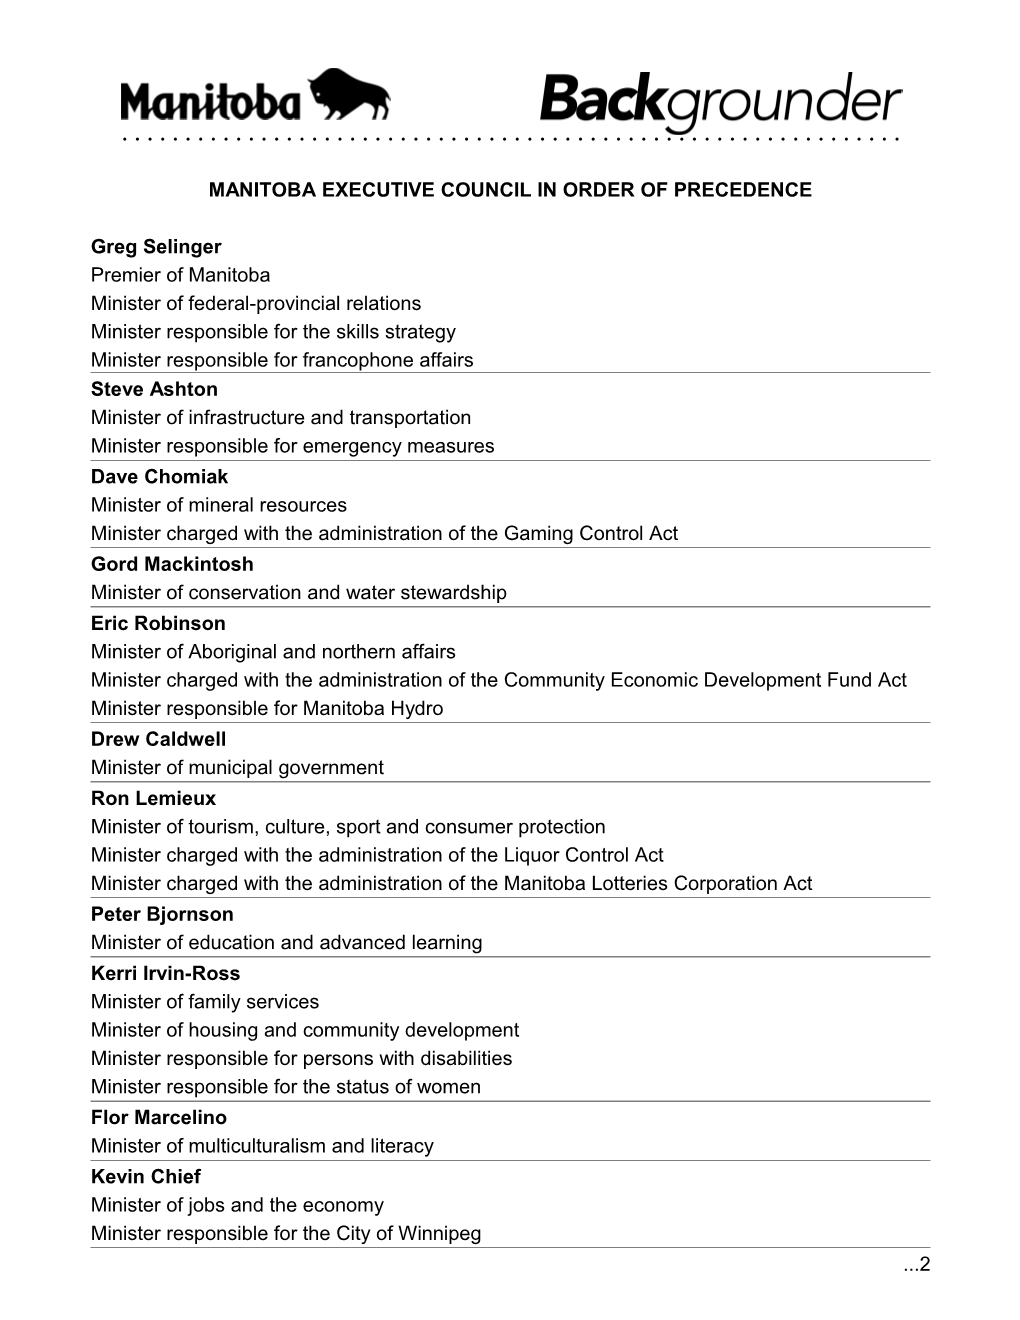 Manitoba Executive Council in Order of Precedence s1